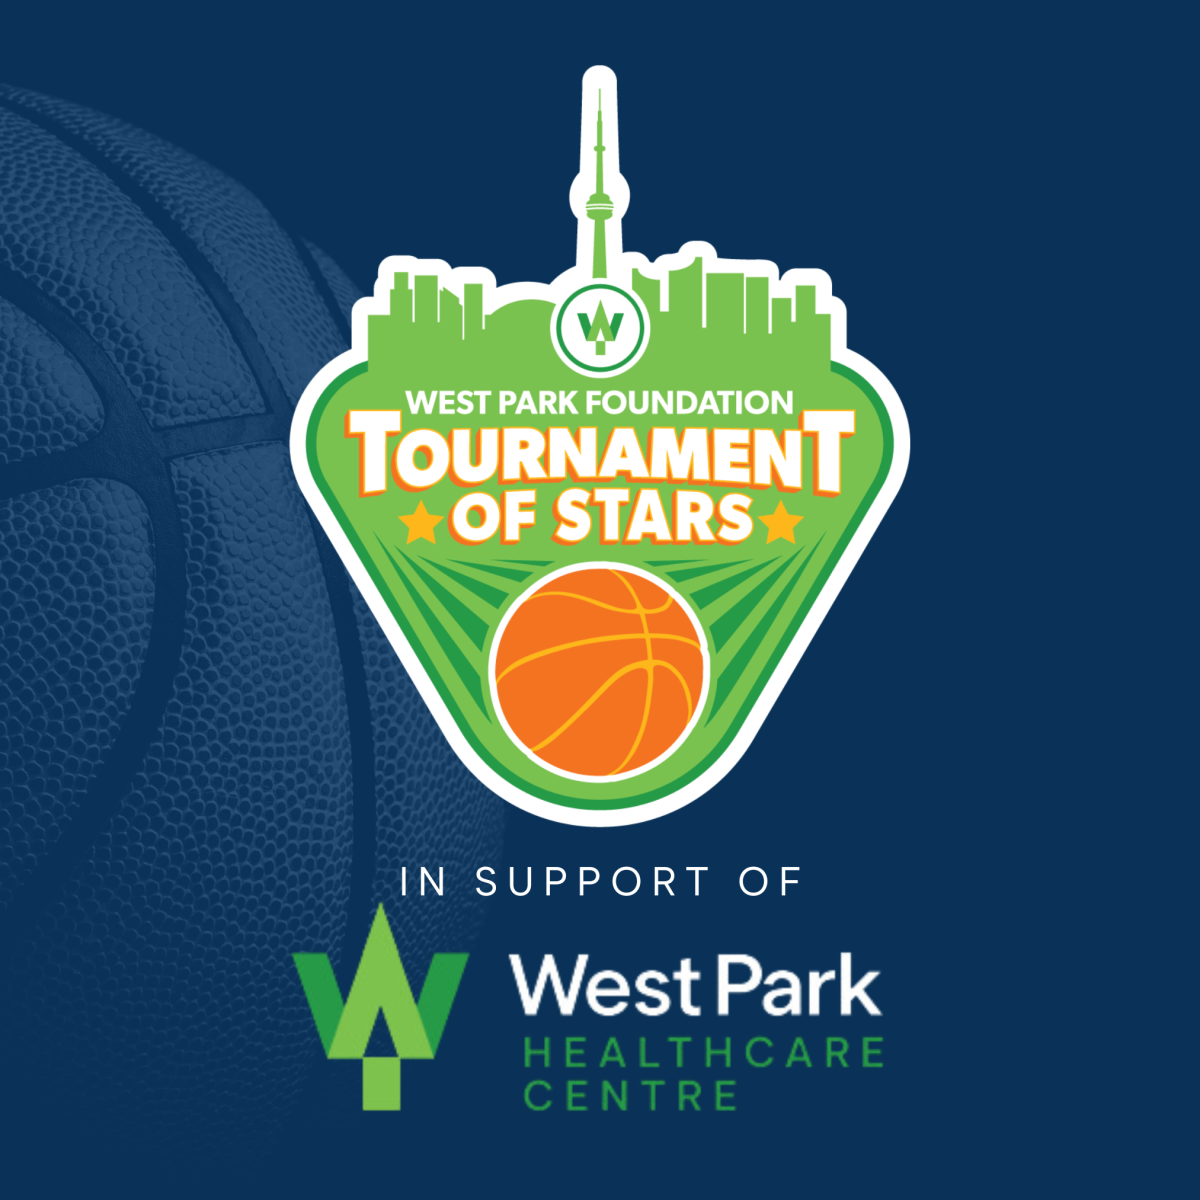 West Park Foundation Tournament of Stars - image